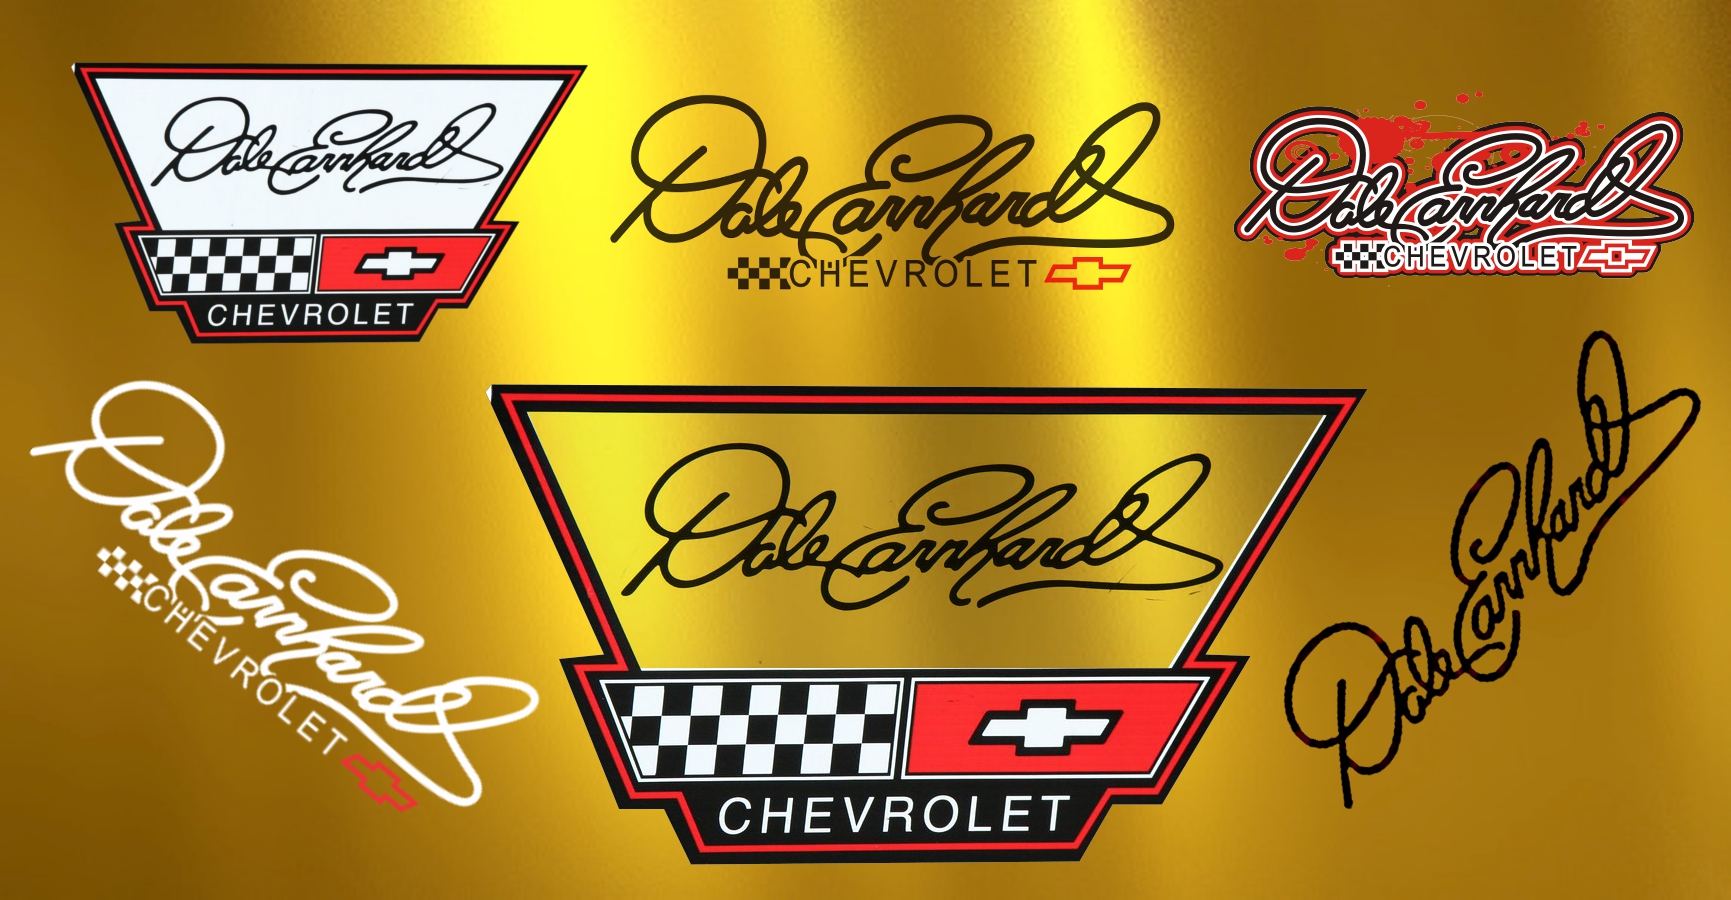 Dale Earnhardt Chevy logos.jpg